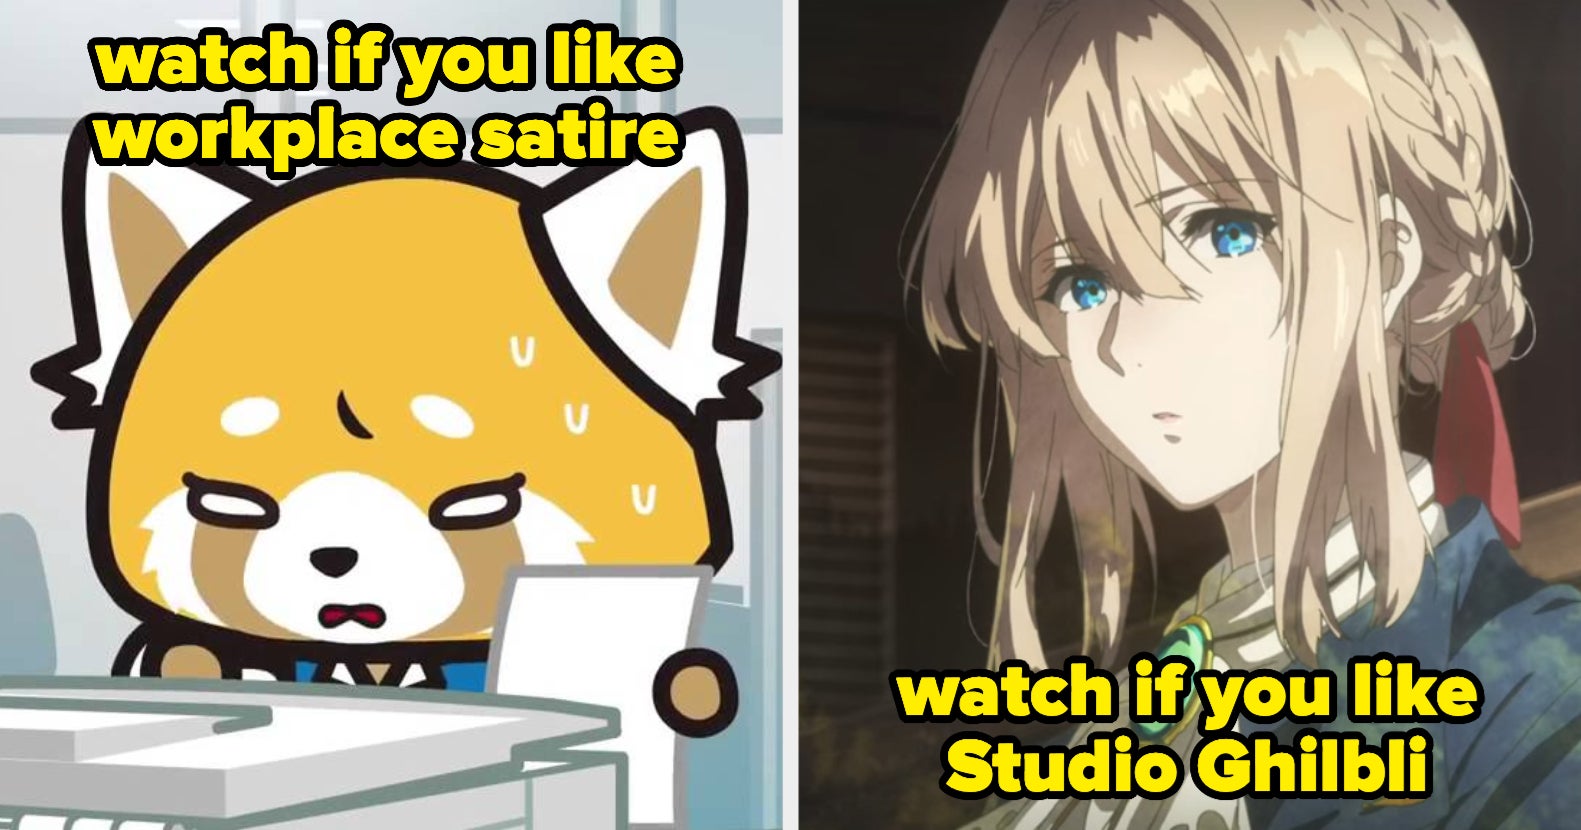 It's Anime Watching, Fast Foward Edition